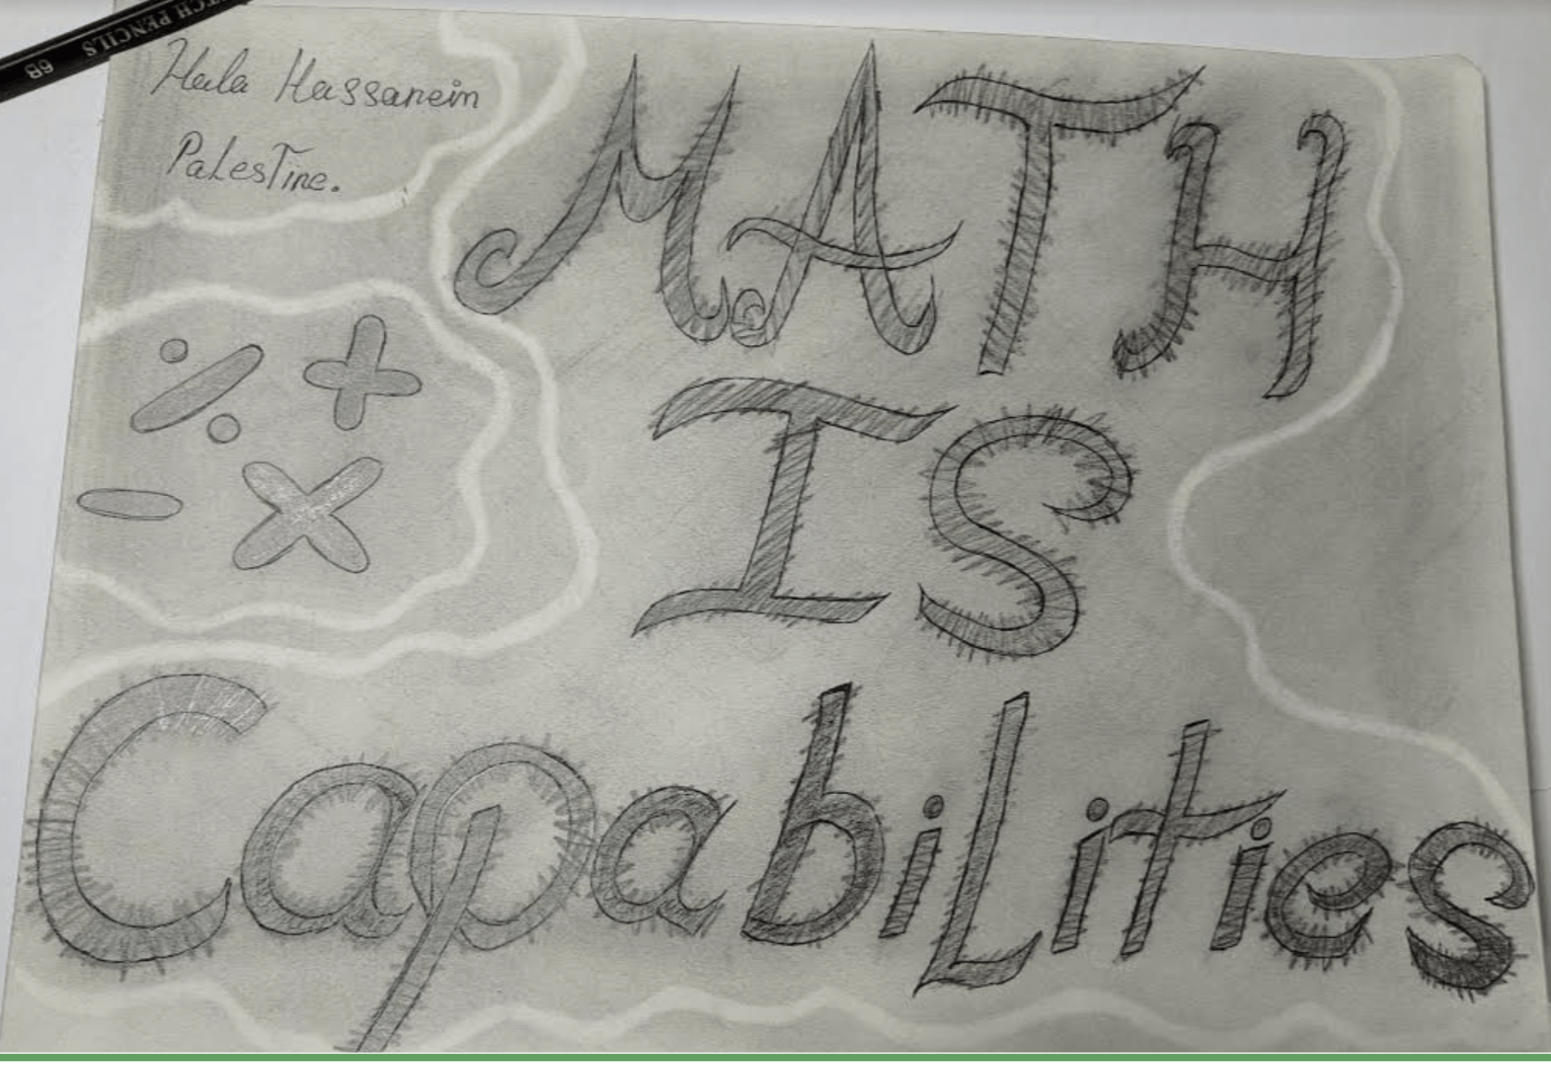 Math Is Image